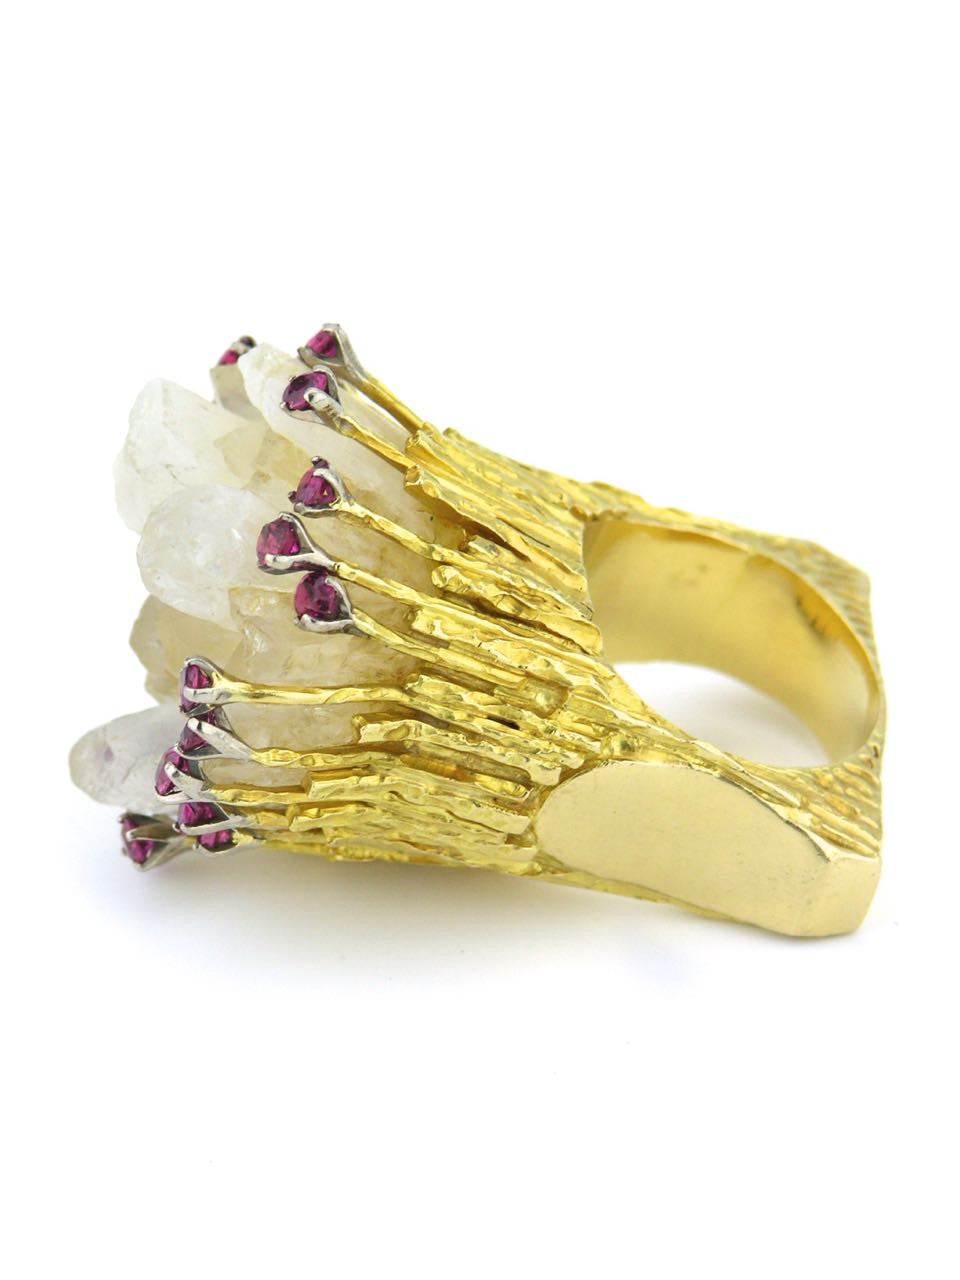 Australian large gold, quartz and ruby organic 70's knuckleduster ring - Rob Bennett